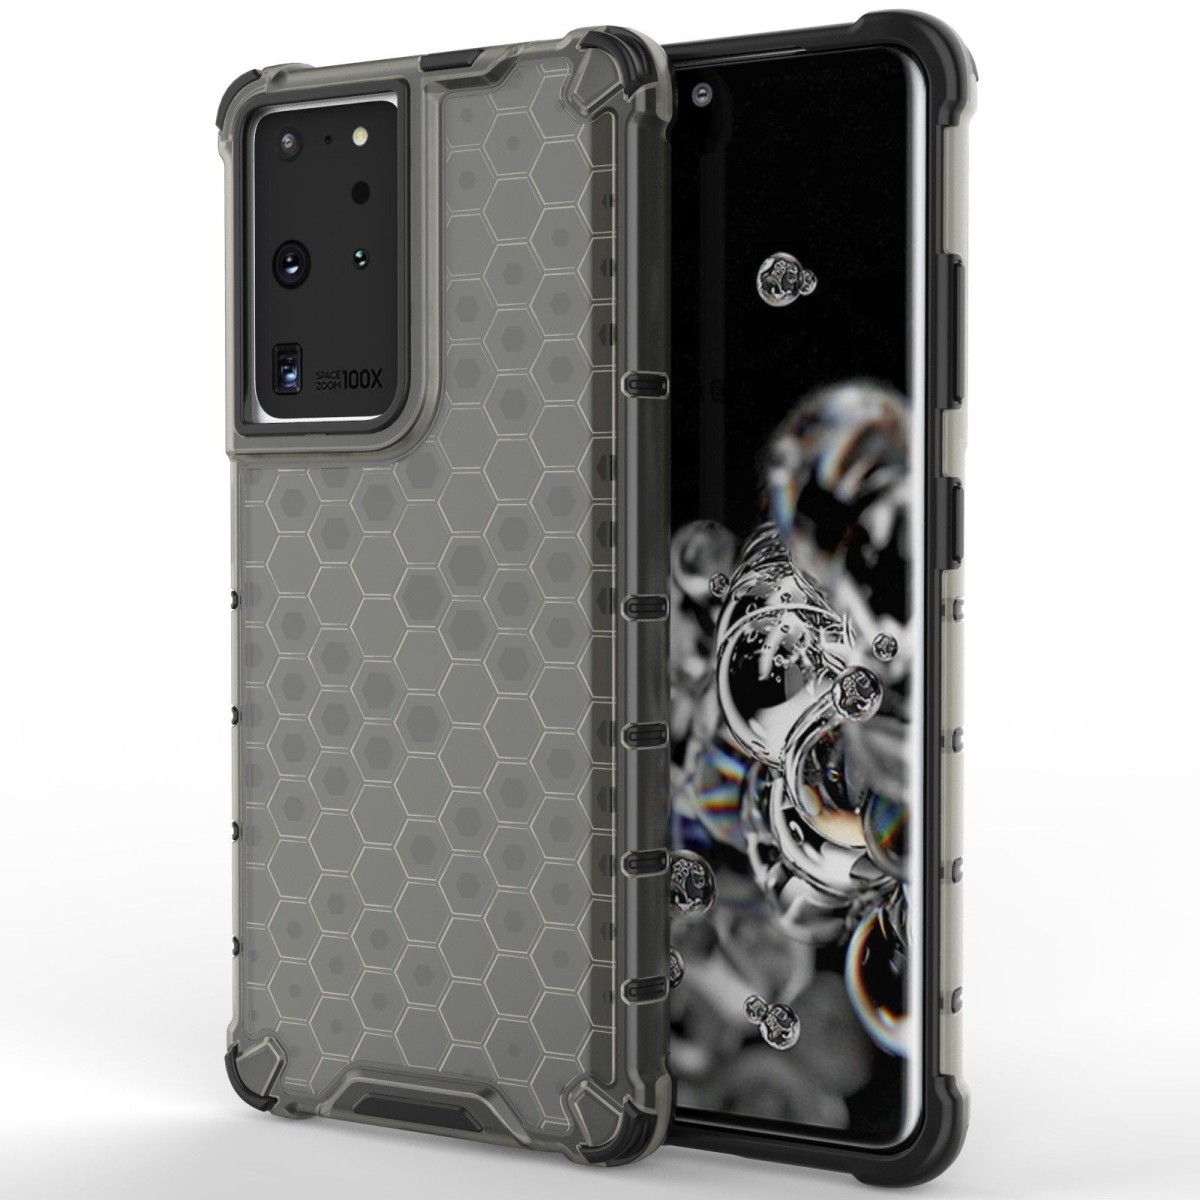 Funda Tipo Honeycomb Armor (Pc+Tpu) Negra para Samsung Galaxy S21 Ultra 5G